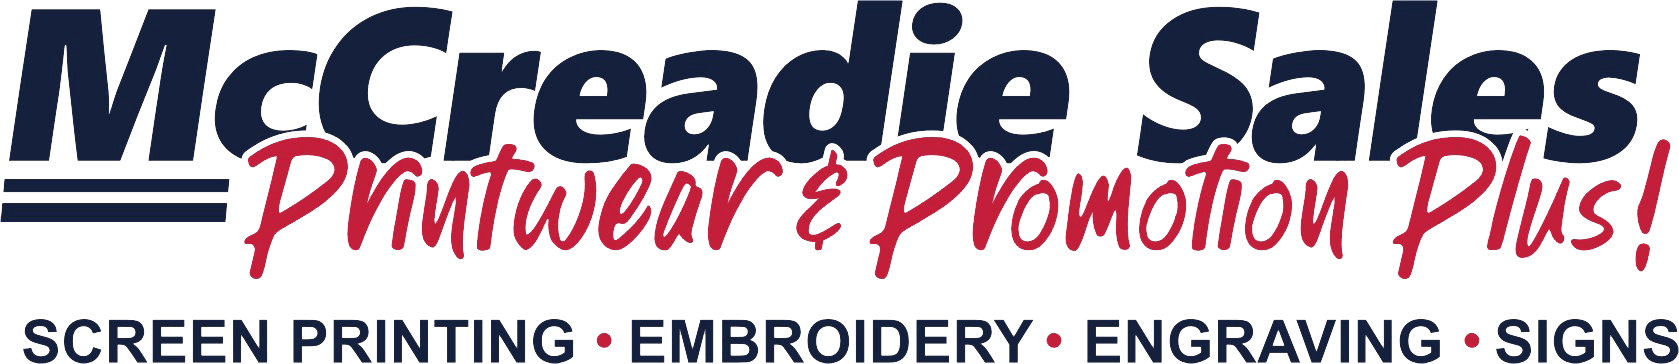 McCreadie Sales Printwear & Promotion Plus Logo